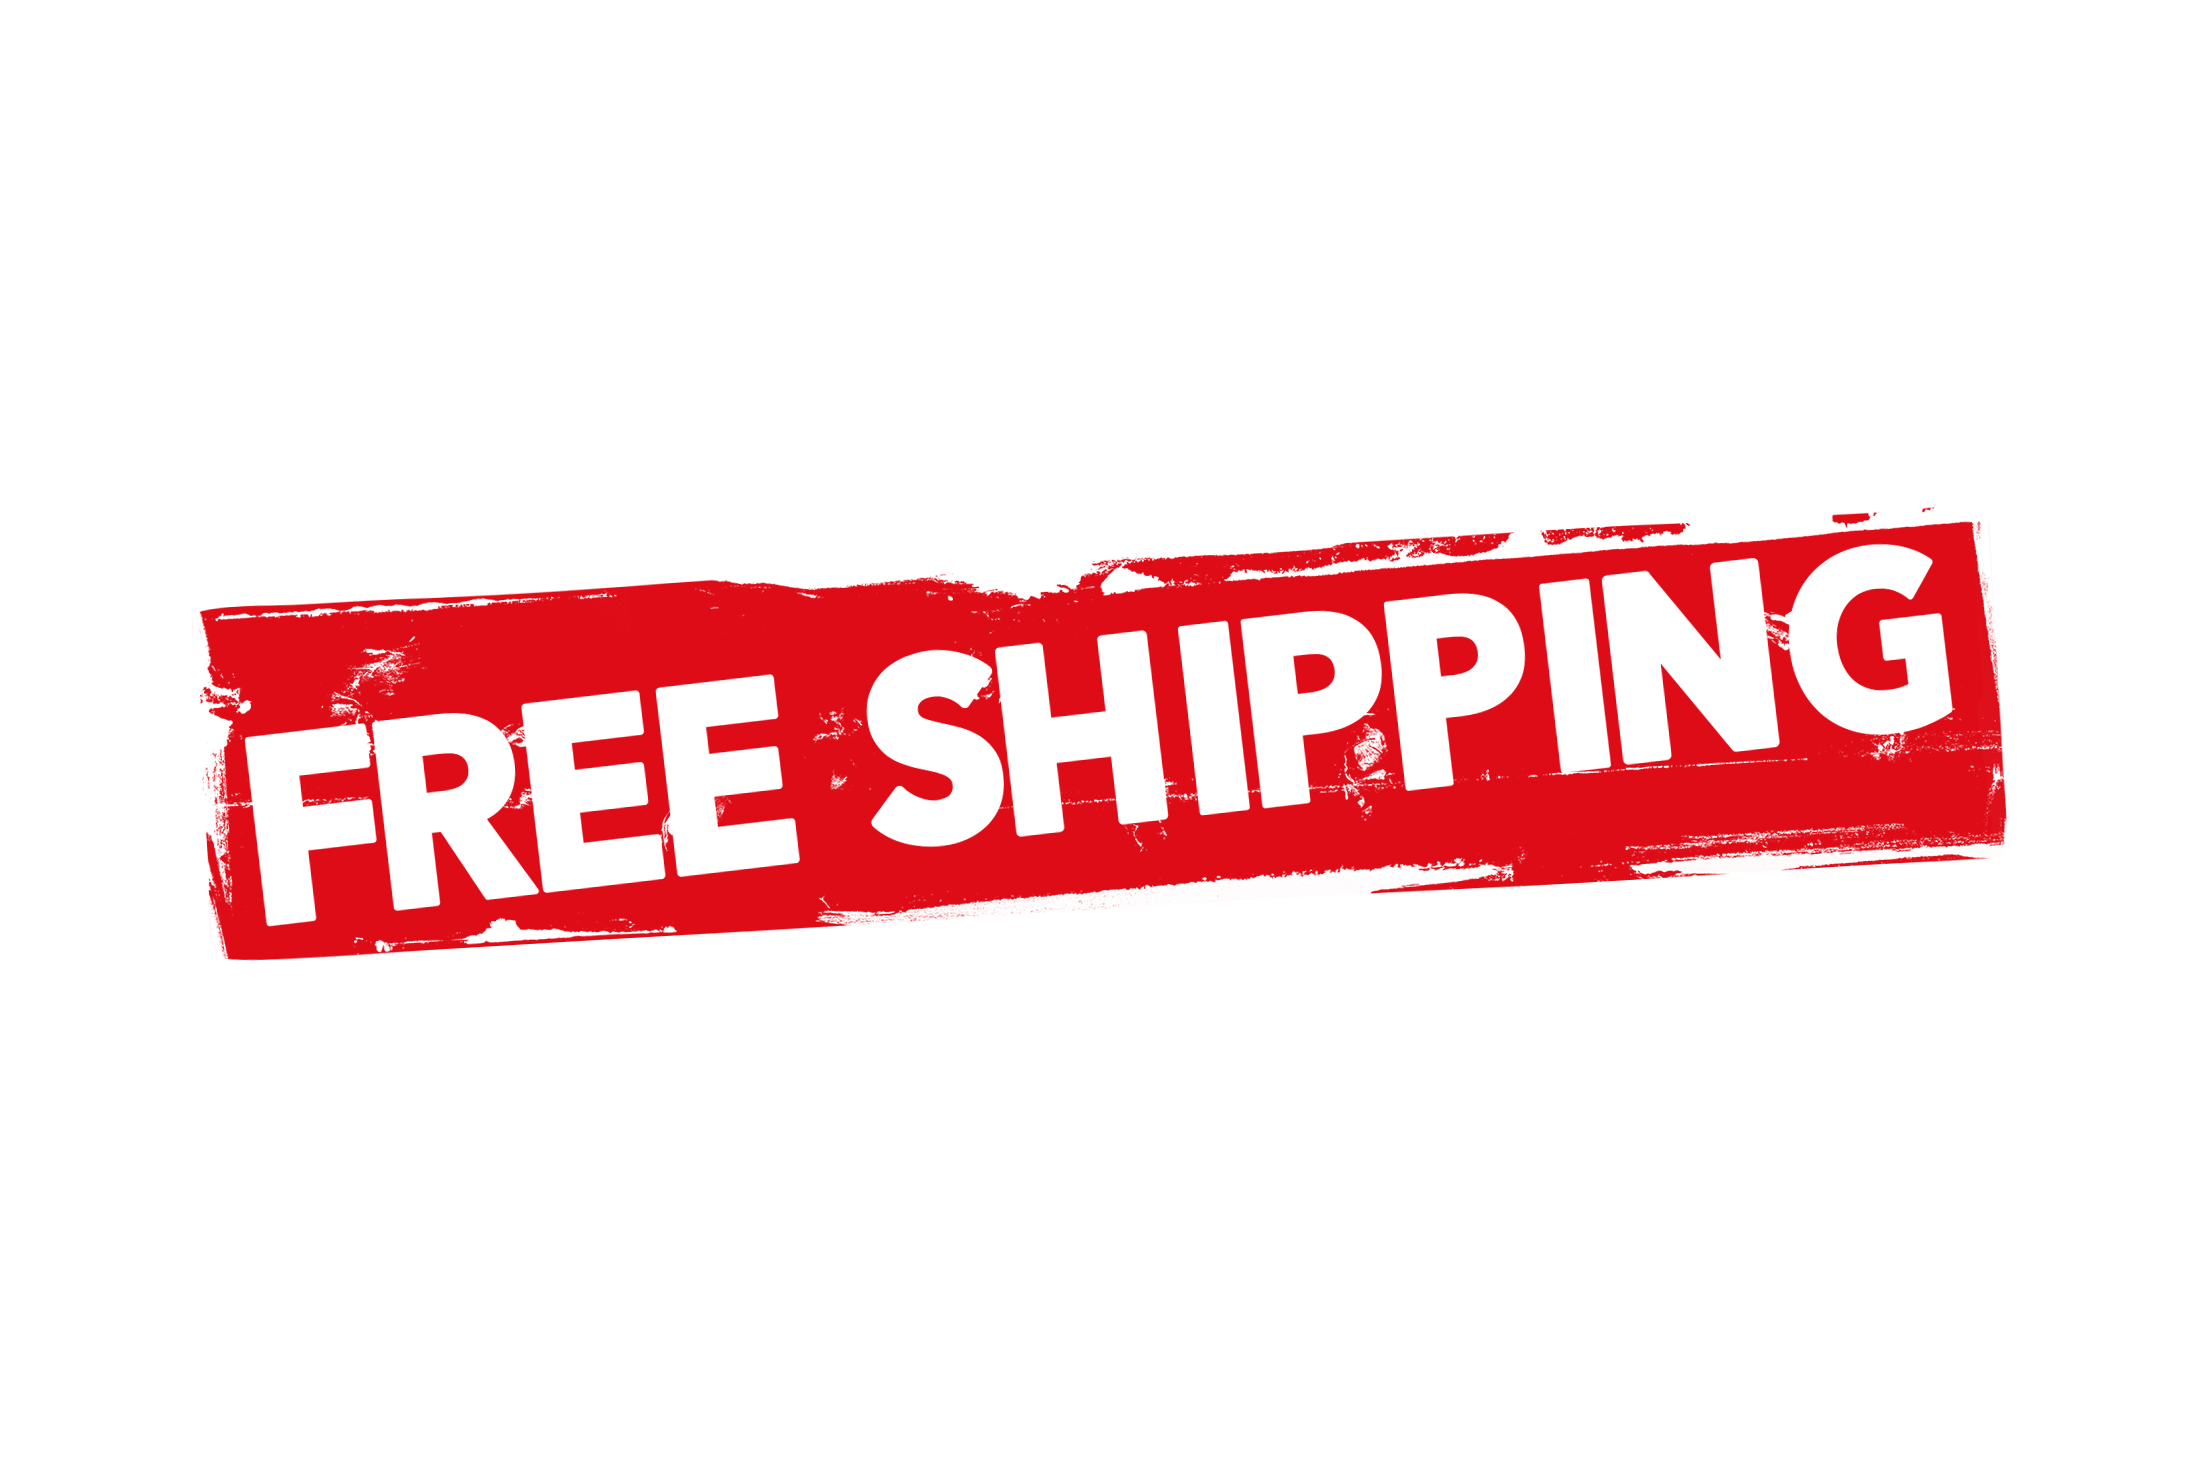 Grunge free shipping label PSD